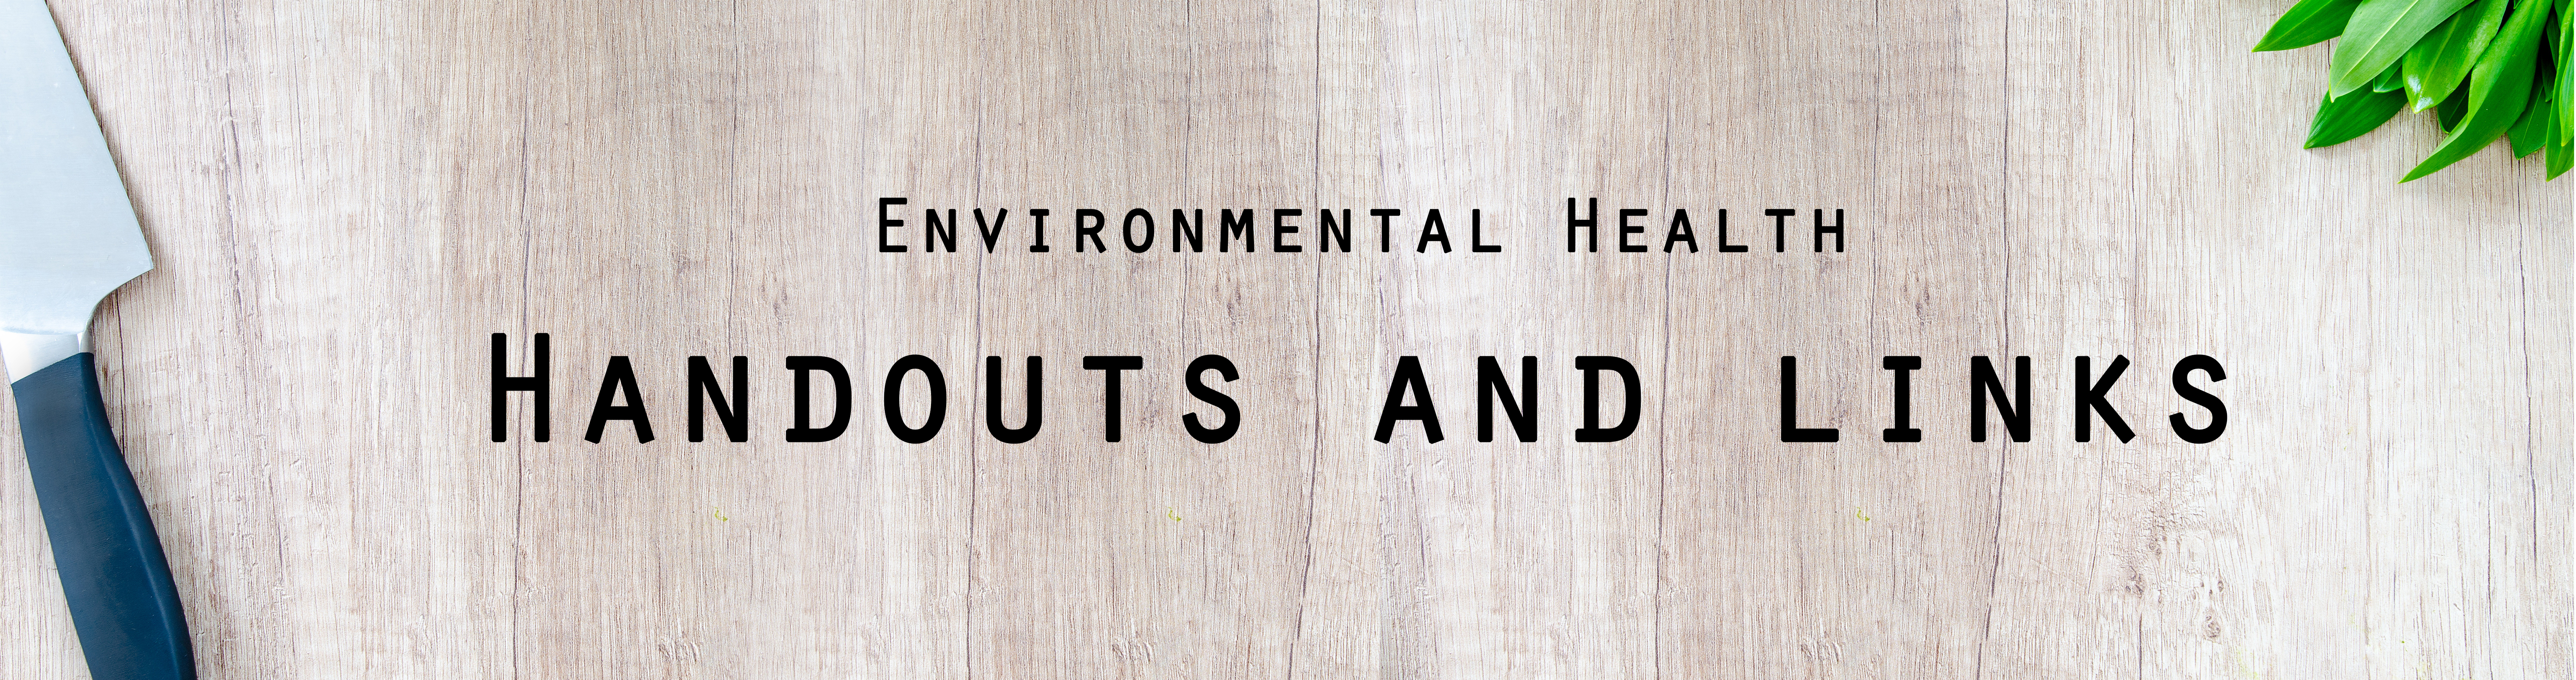 Environmental Health Banner